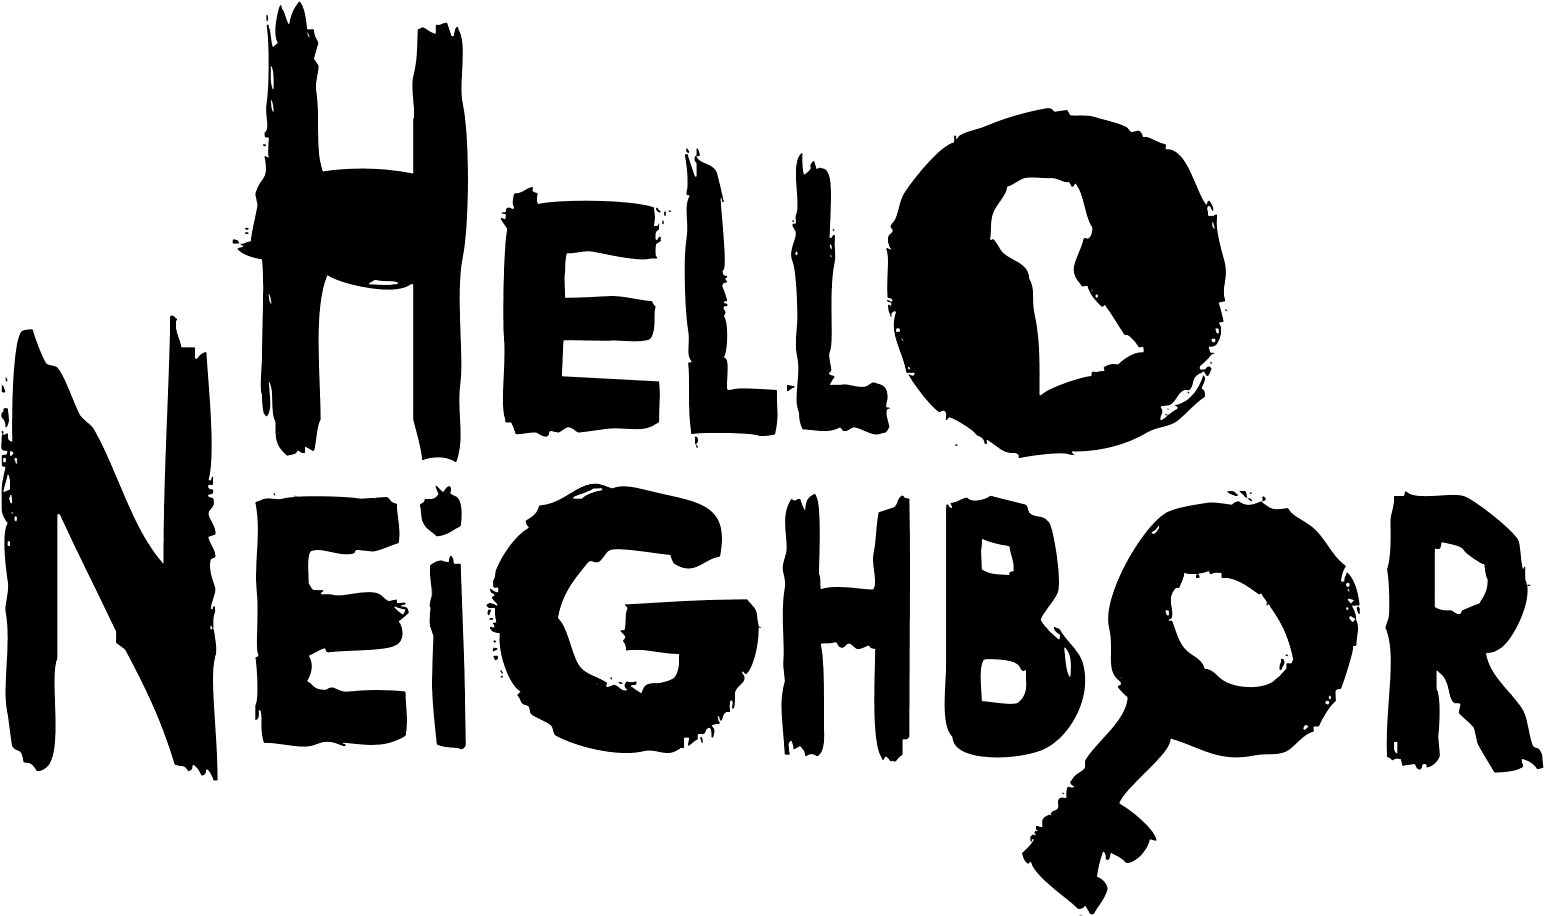 Хеллоу найти. Hello Neighbor 2 лого. Привет сосед значок. Привет сосед надпись. Привет сосед без фона.